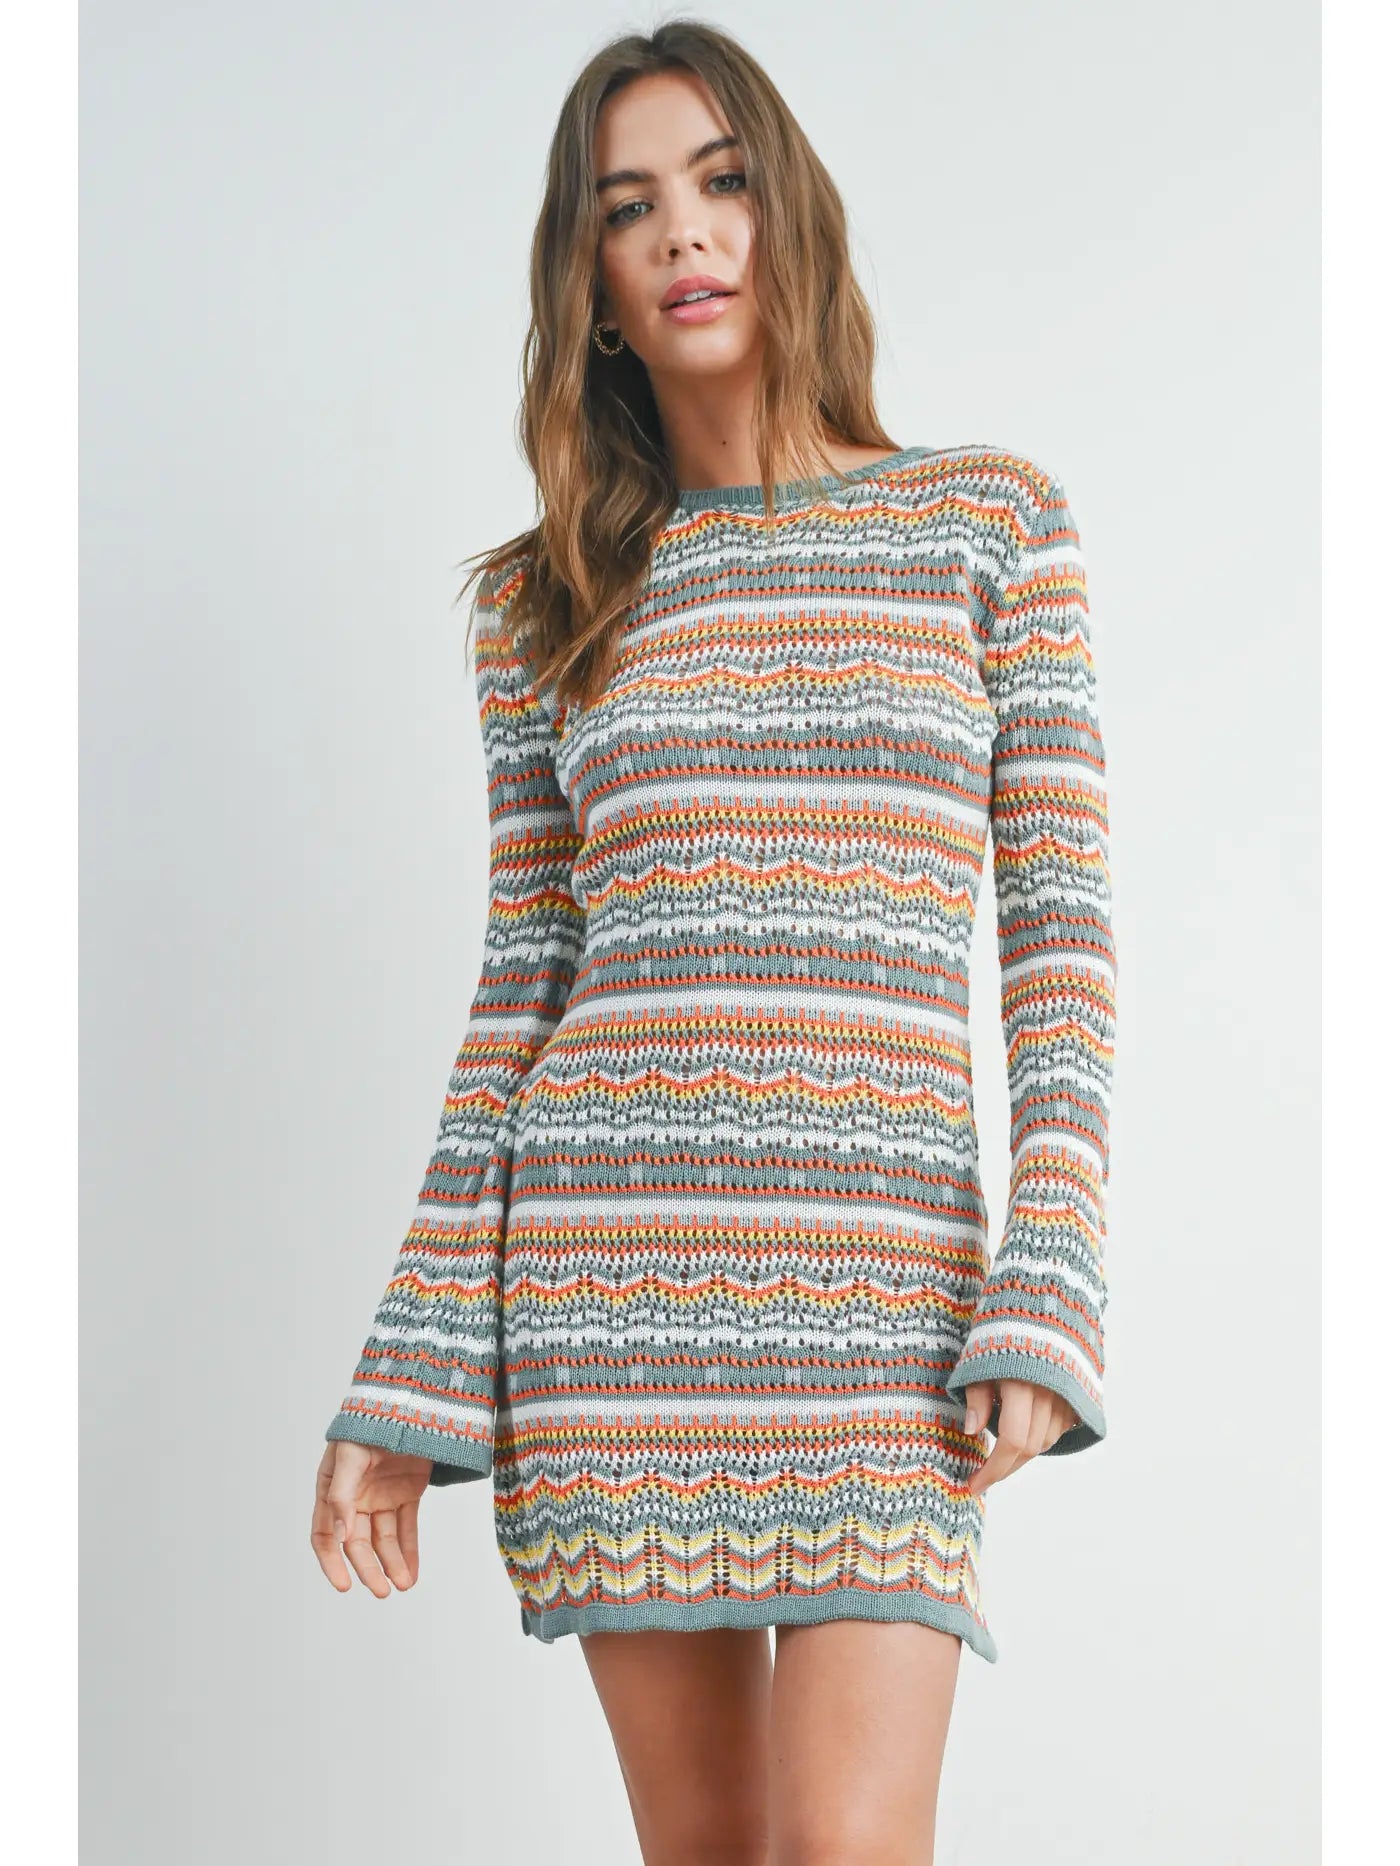 Multicolored Sweater Dress